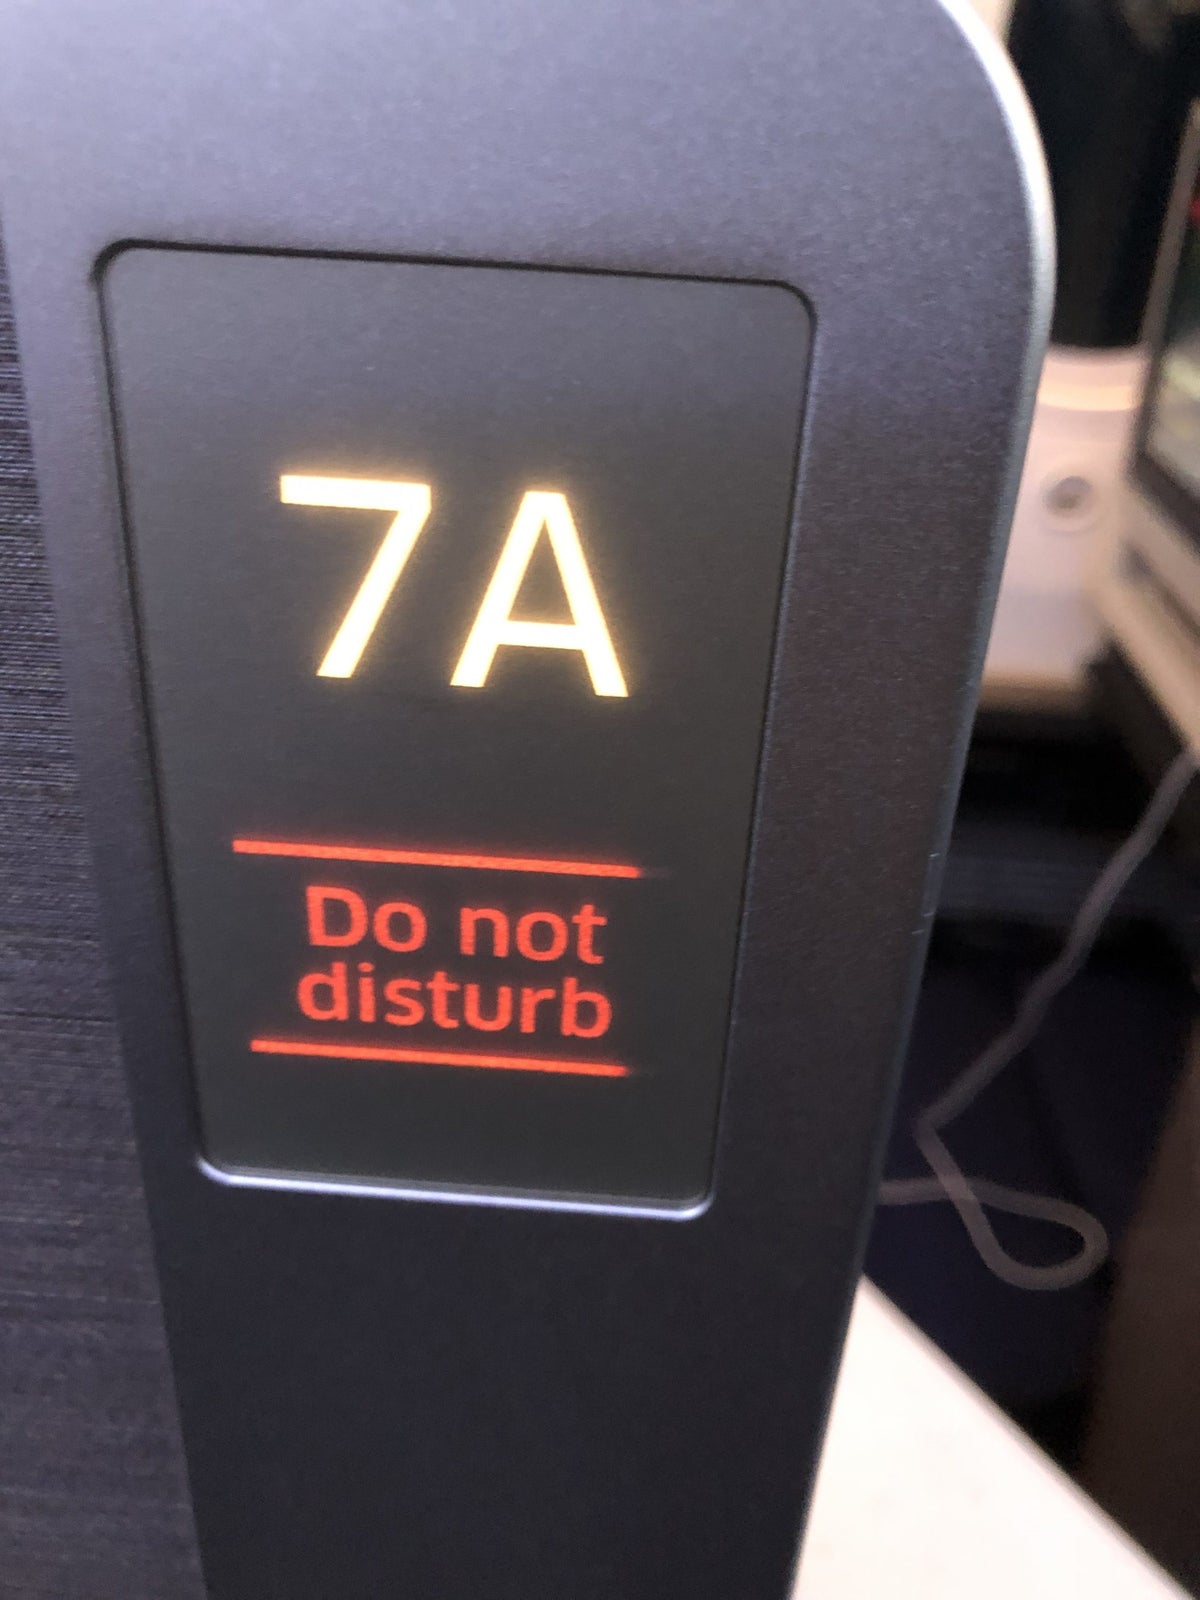 United Polaris 787-10 do not disturb lighting